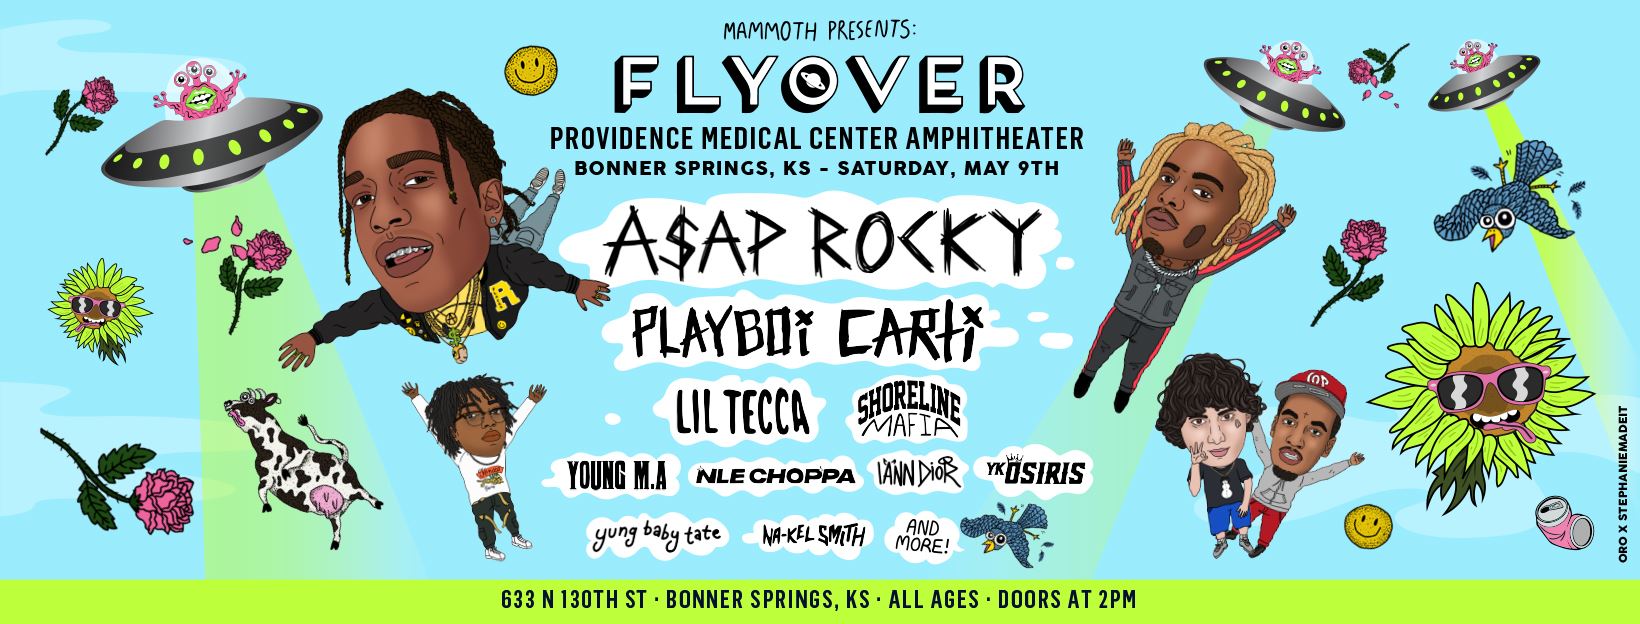 Flyover 2020: A$AP Rocky, Playboi Carti, Young M.A. & Lil Tecca